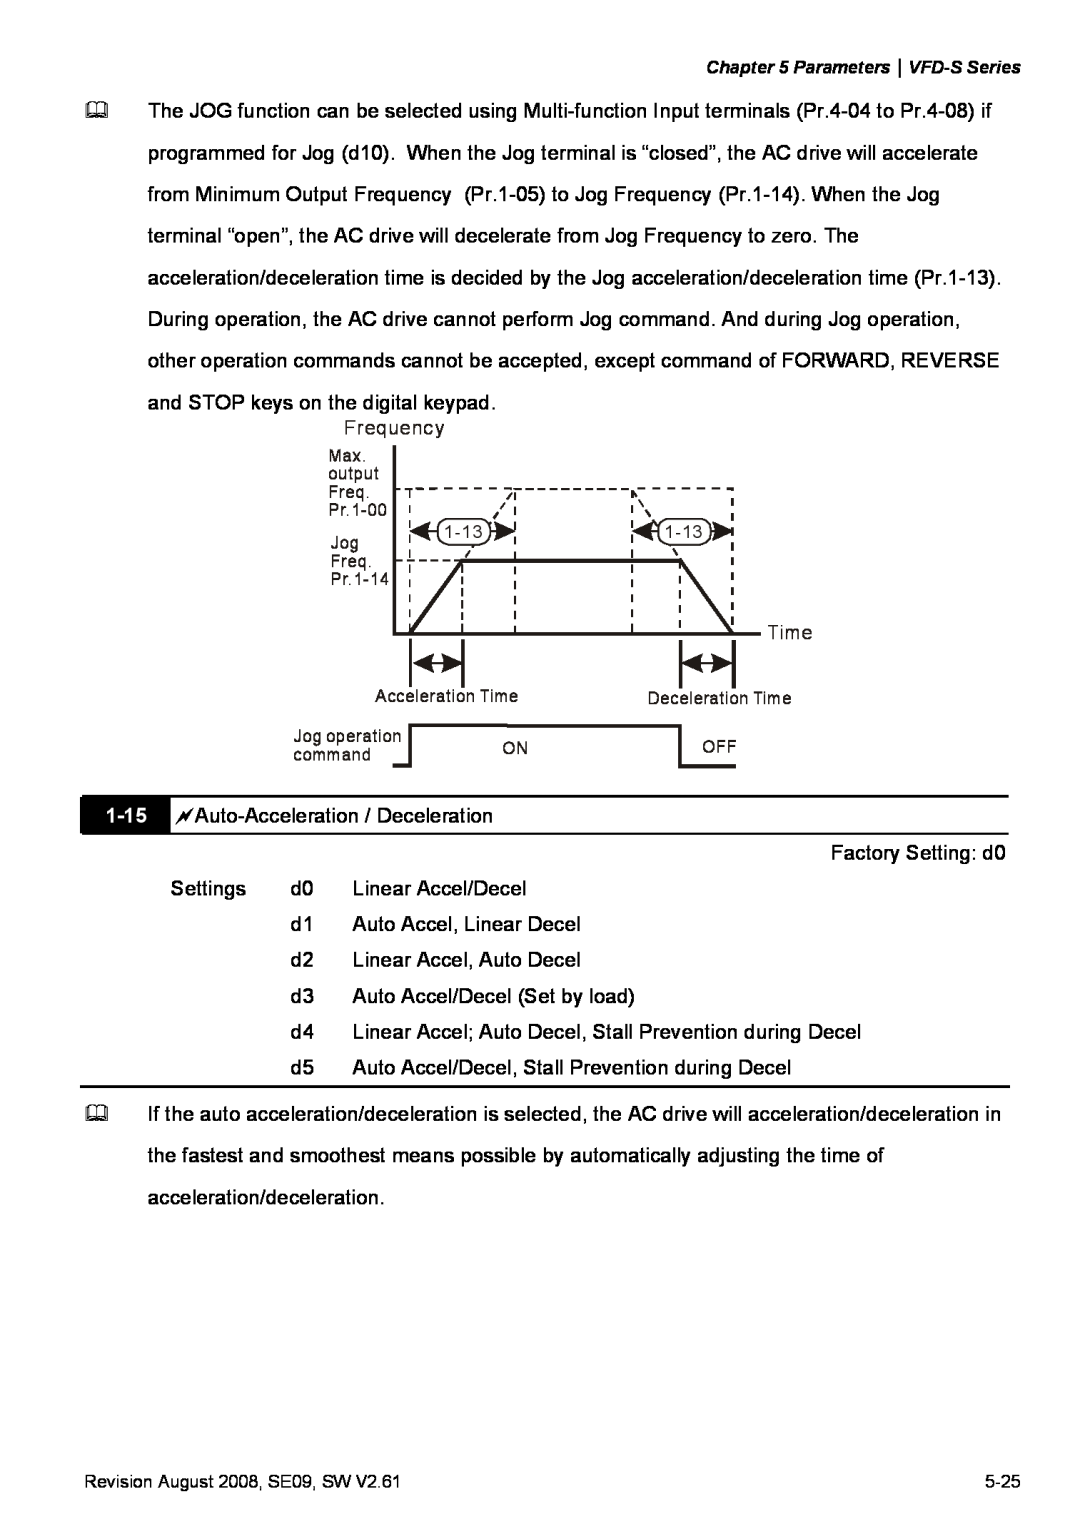 Delta Electronics VFD-S manual Frequency, Max. output Freq. Pr.1-00, Pr.1-14, Acceleration Time Jog operation commandON 